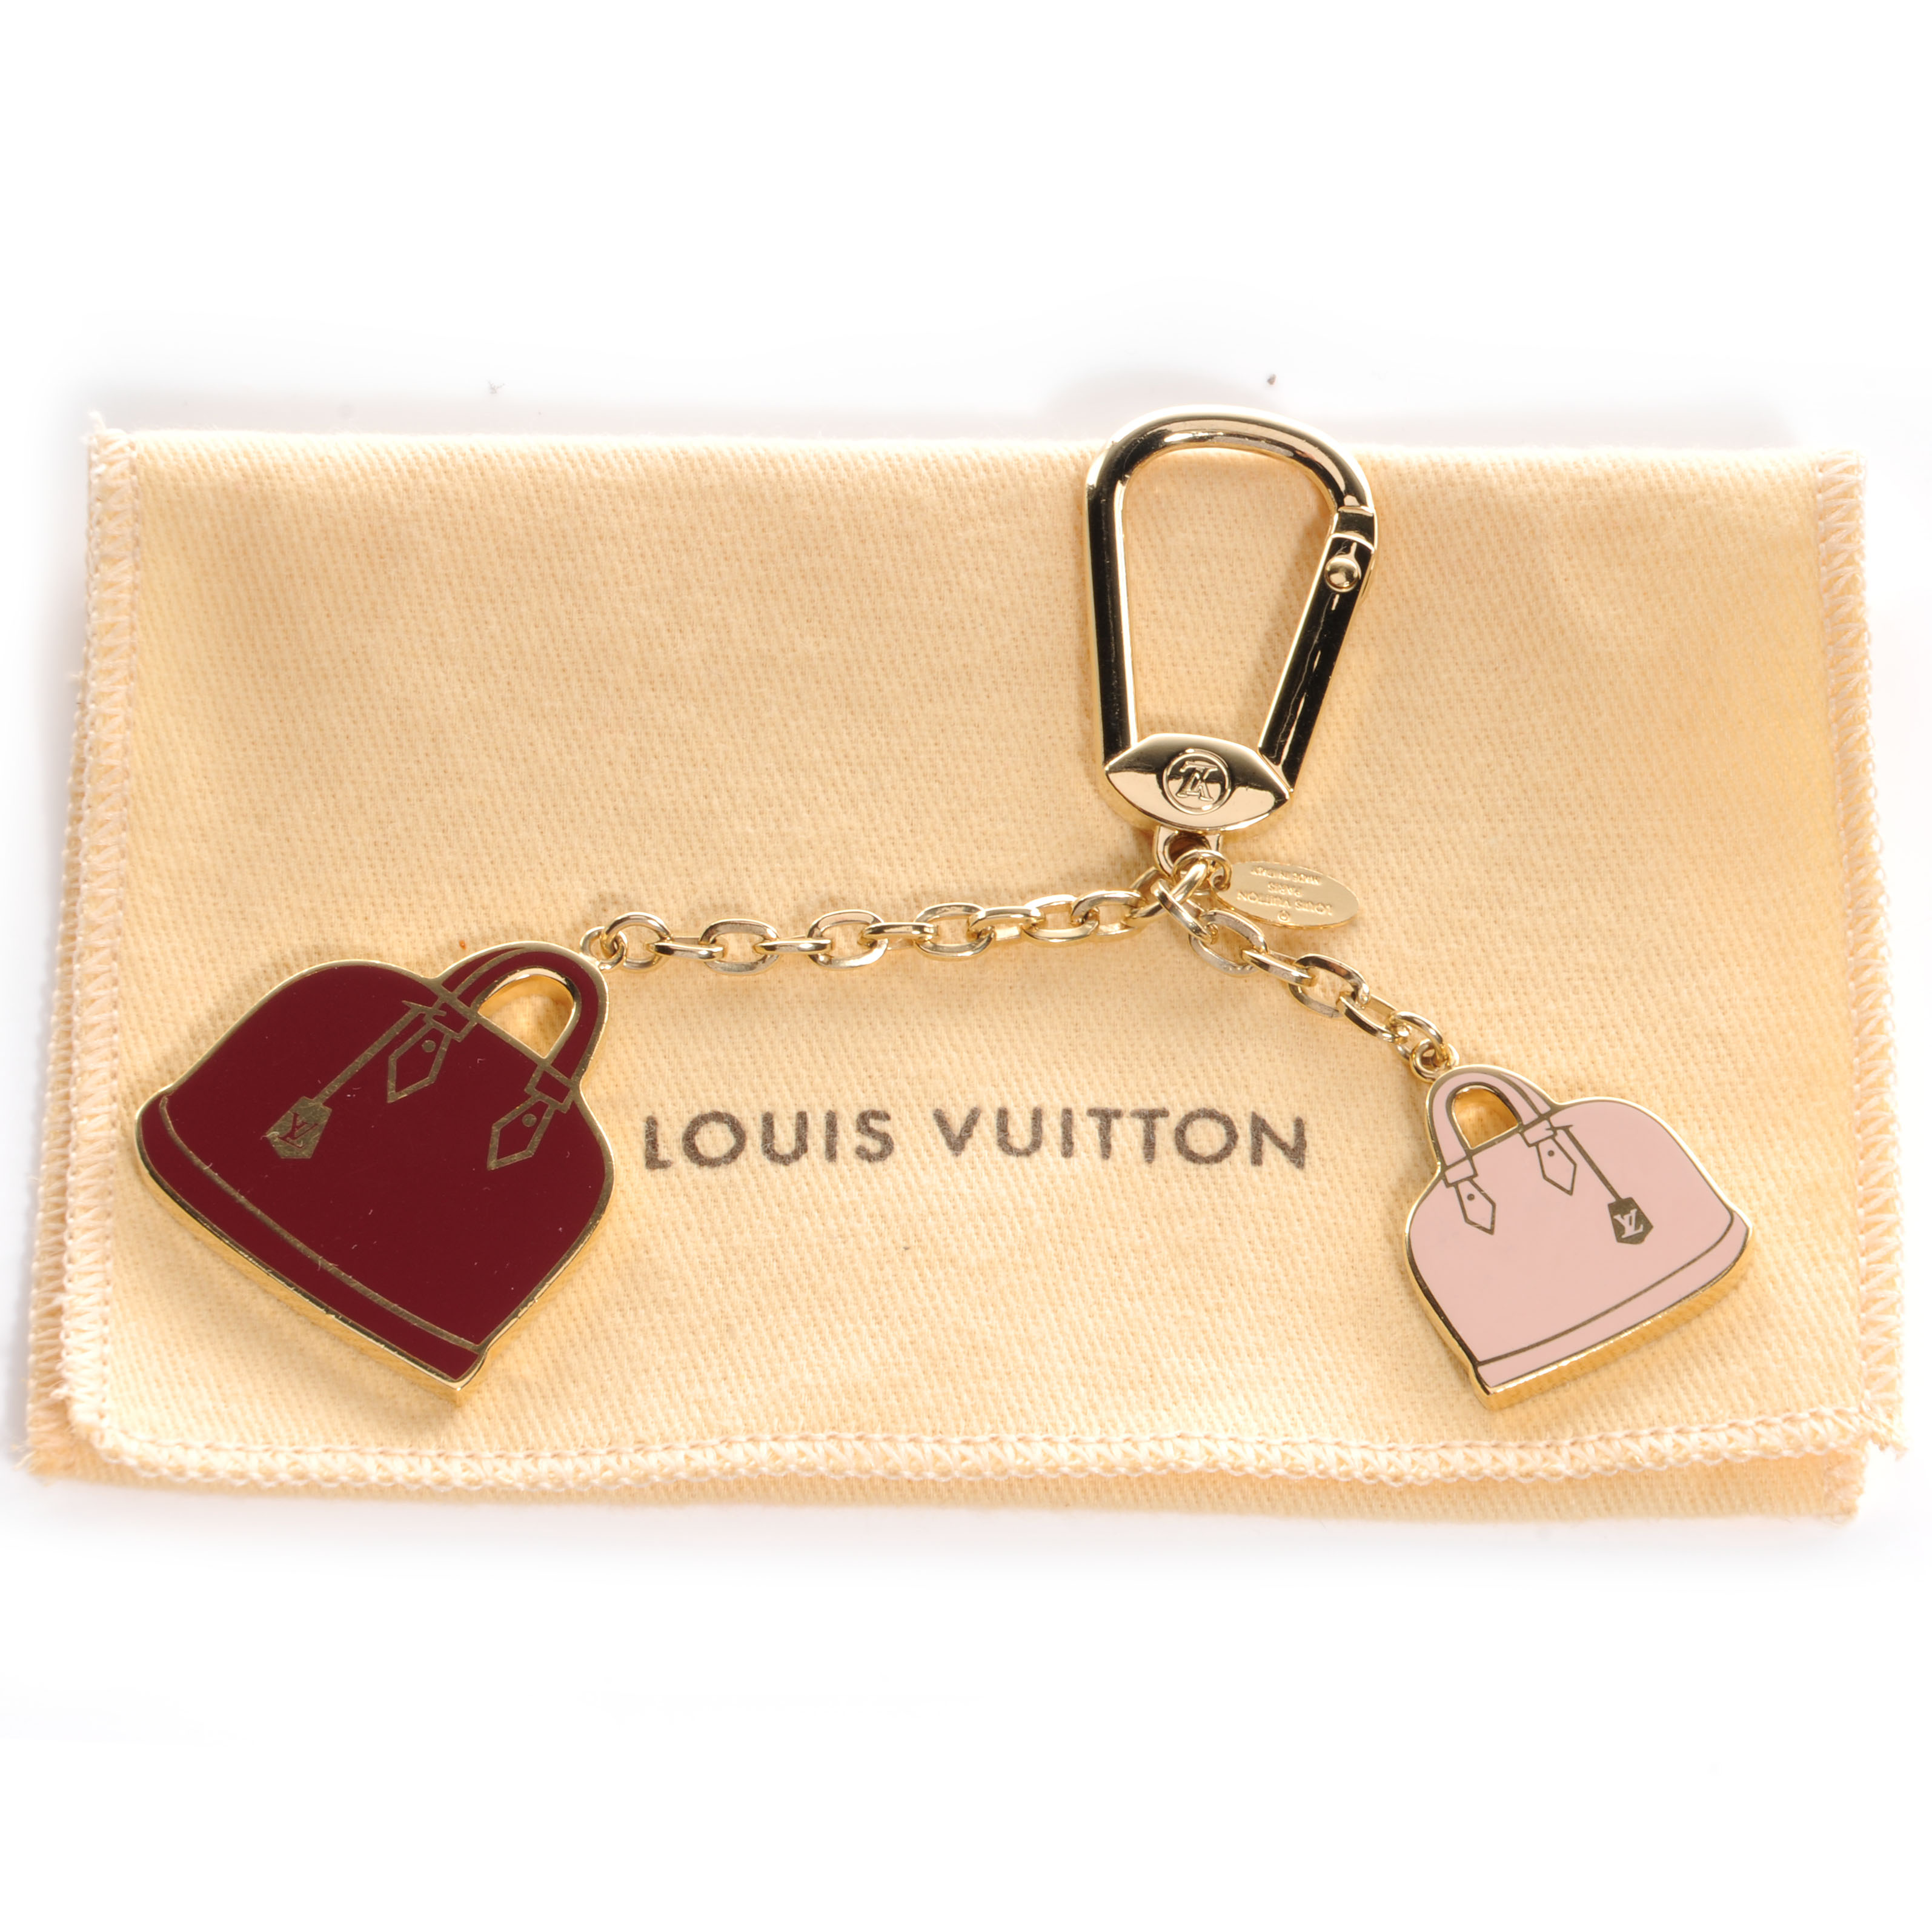 LOUIS VUITTON Iconic Alma Bag Charm 63118